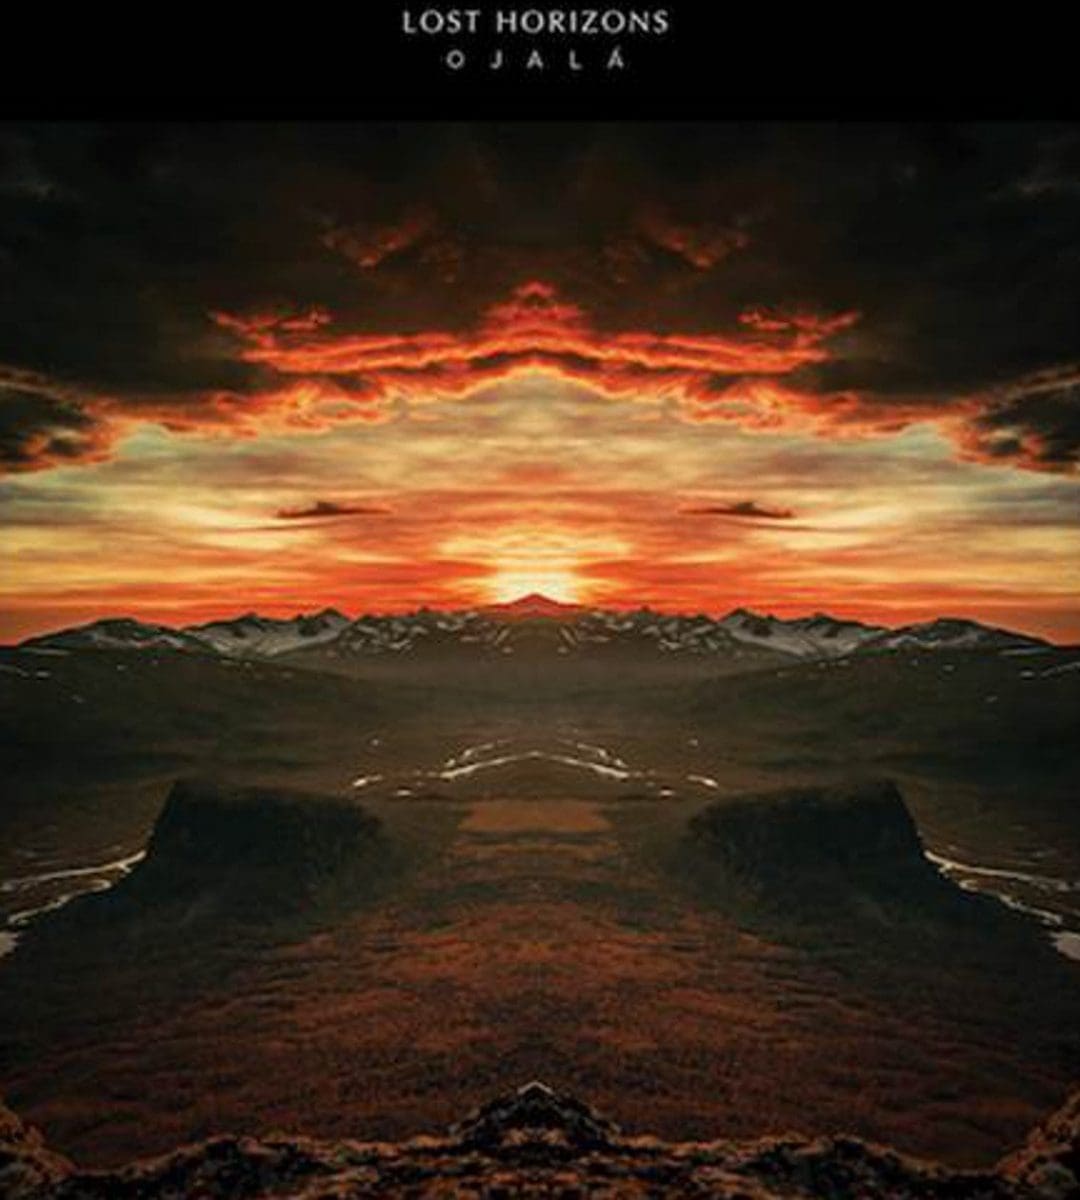 Simon Raymonde (Cocteau Twins, Bella Union label) presents debut album 'Ojalá' by Lost Horizons